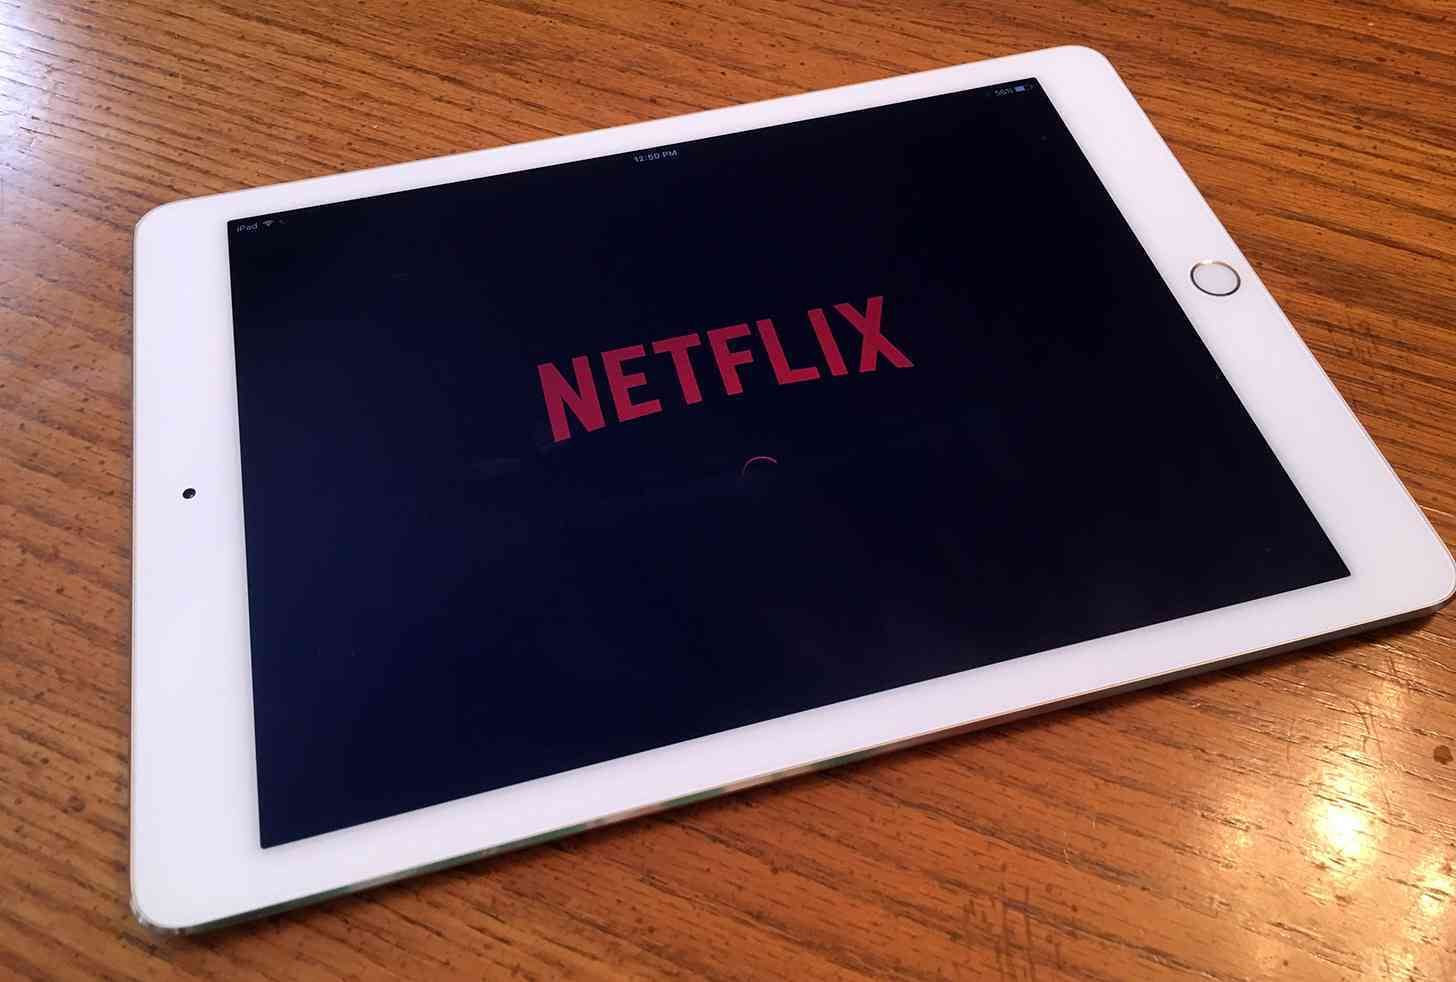 Netflix on the iPad